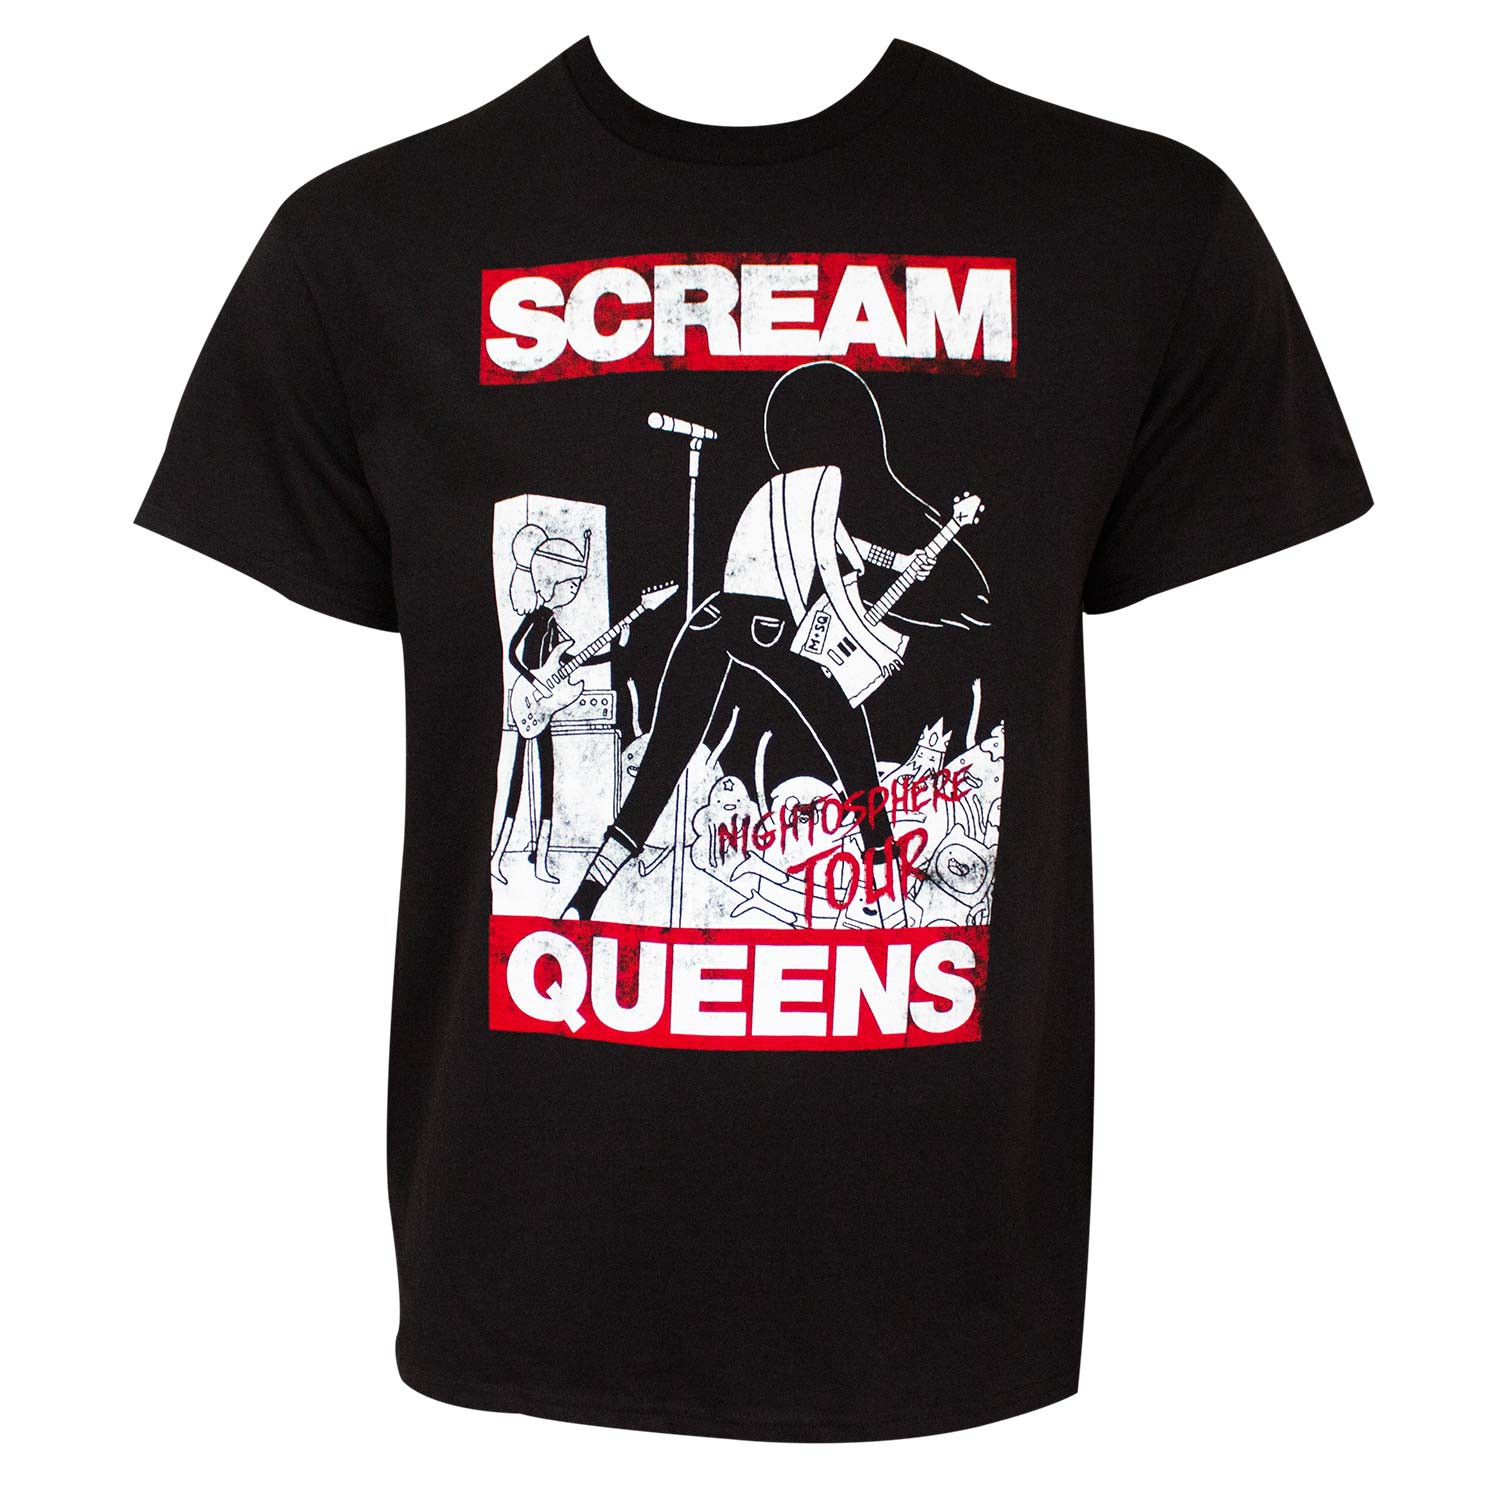 Adventure Time Scream Queens Band Men's Black T-Shirt